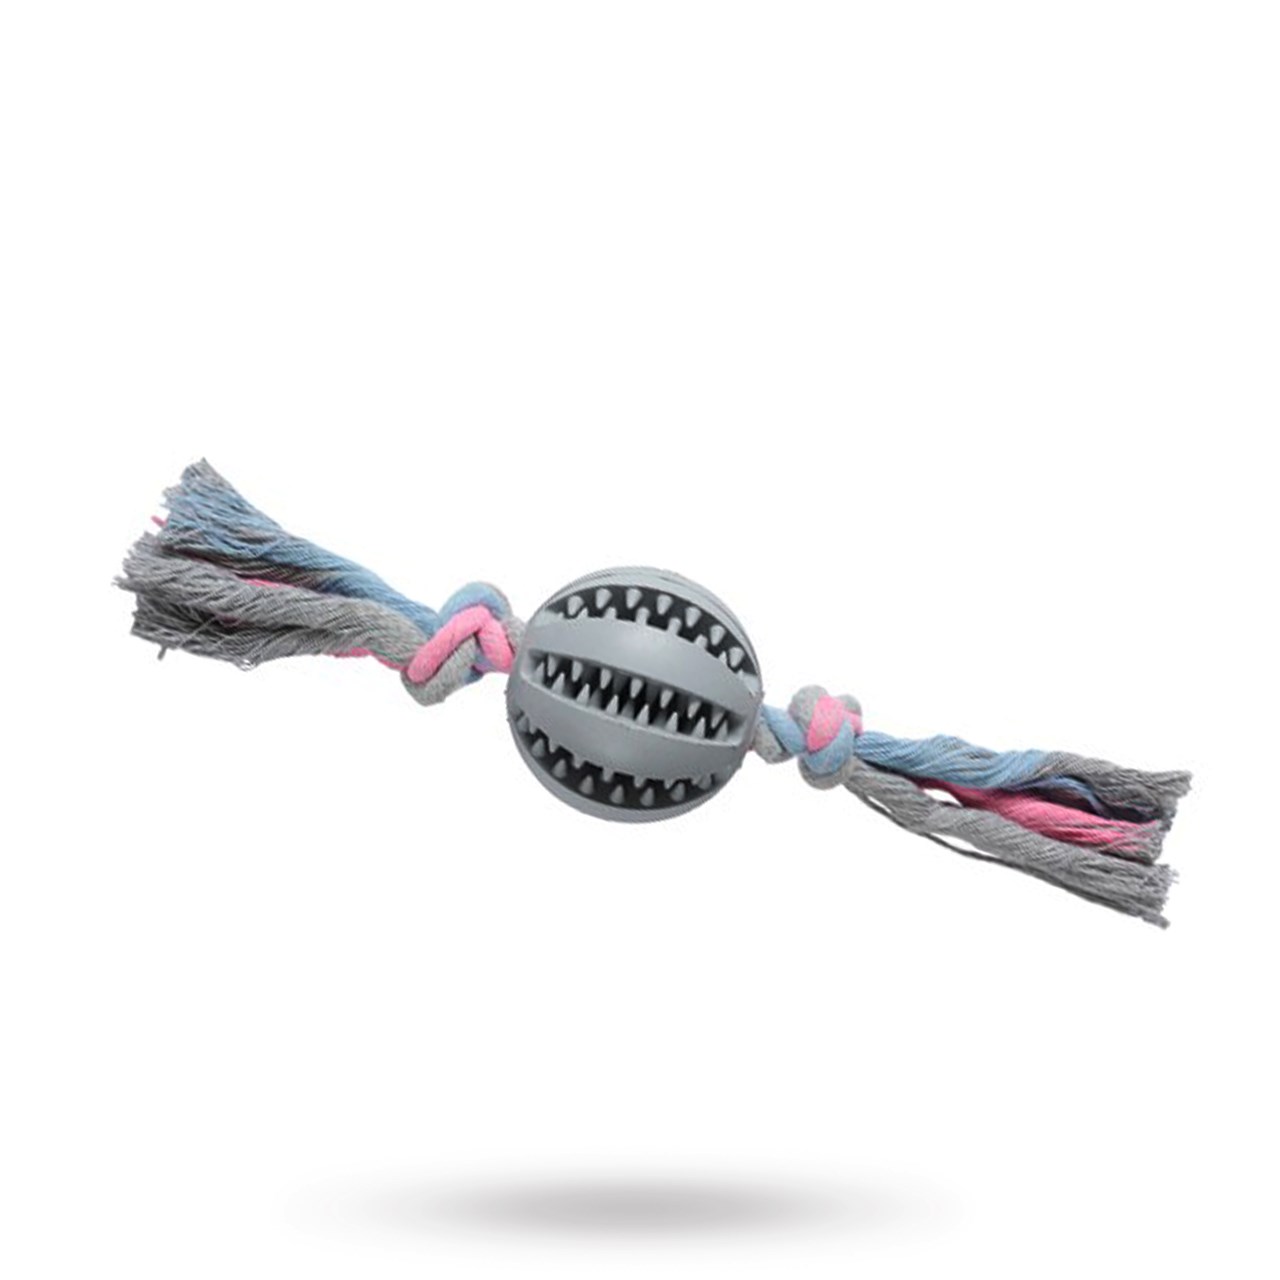 Companion Dental Chewing Ball On Rope - Flytande Hundleksak